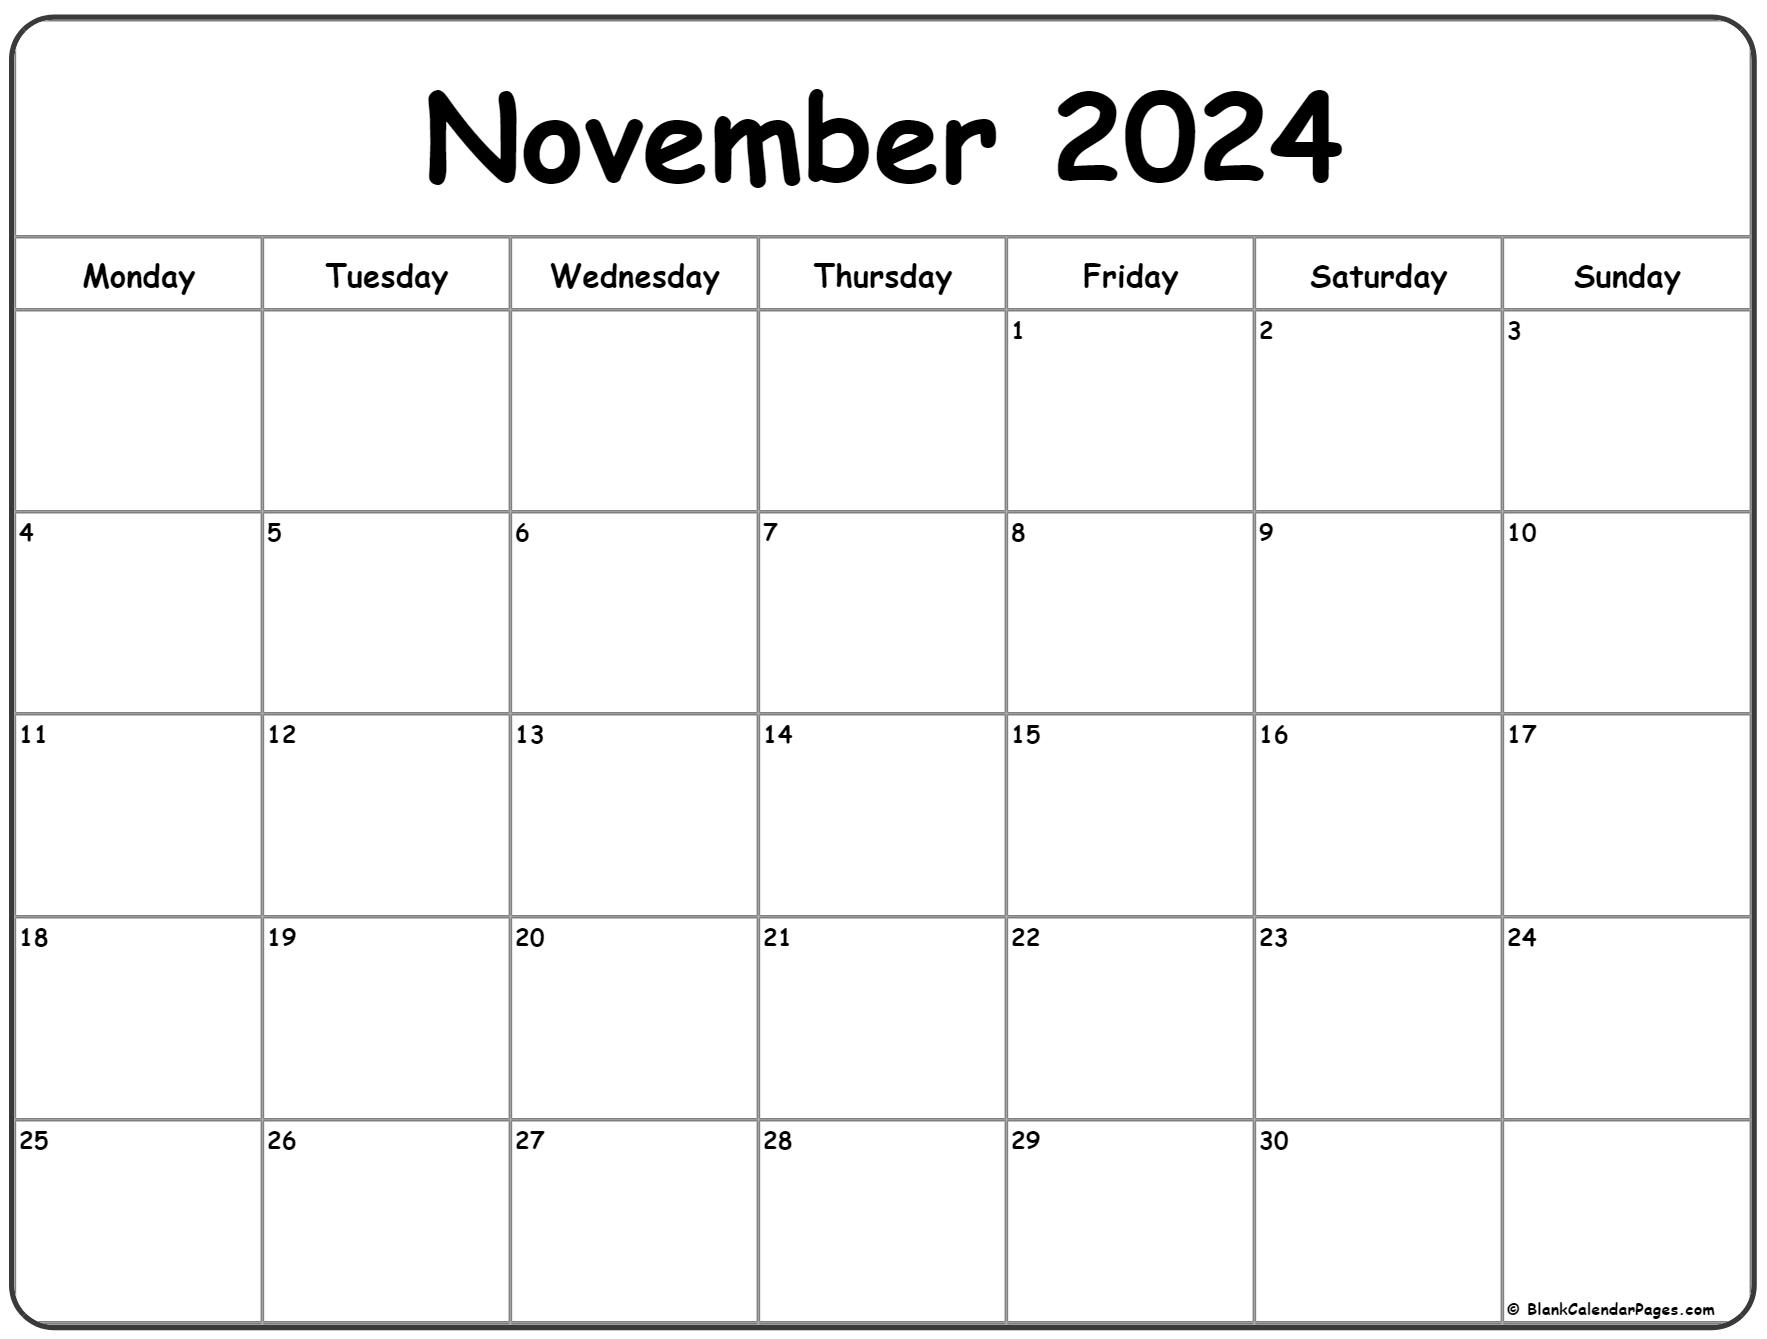 November 2024 Monday Calendar | Monday To Sunday for Nov 2024 Calendar Printable